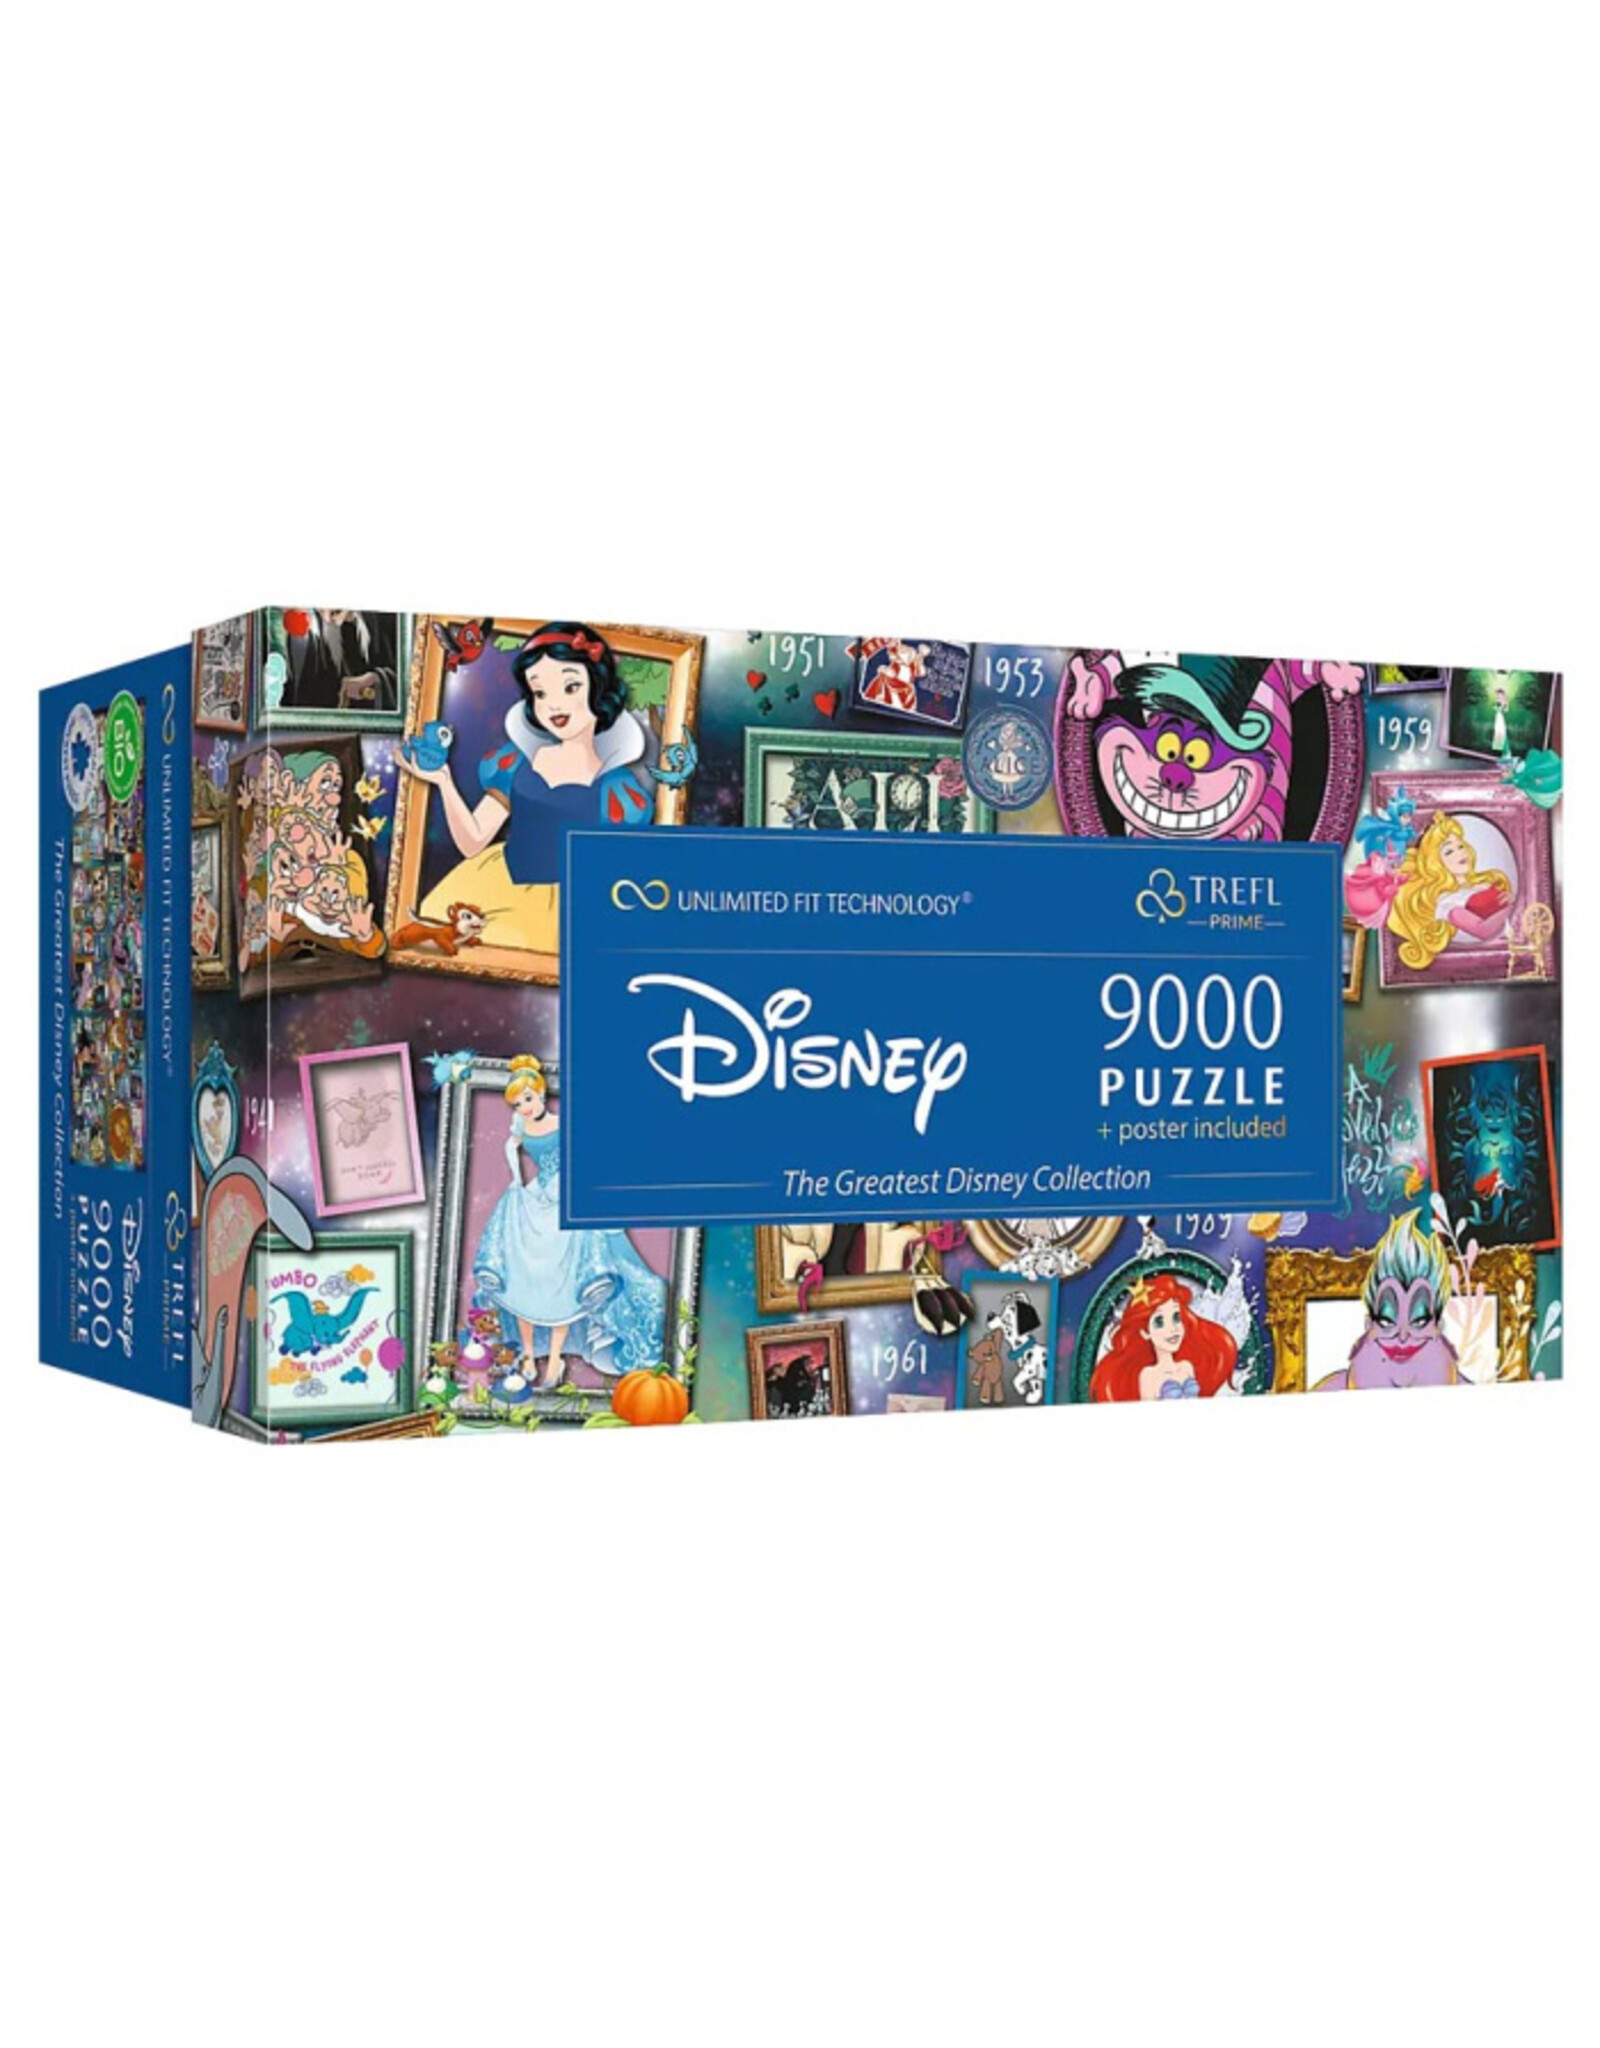 Trefl Puzzle: Disney The Greatest Disney Collection 9000 Piece (Trefl Prime)